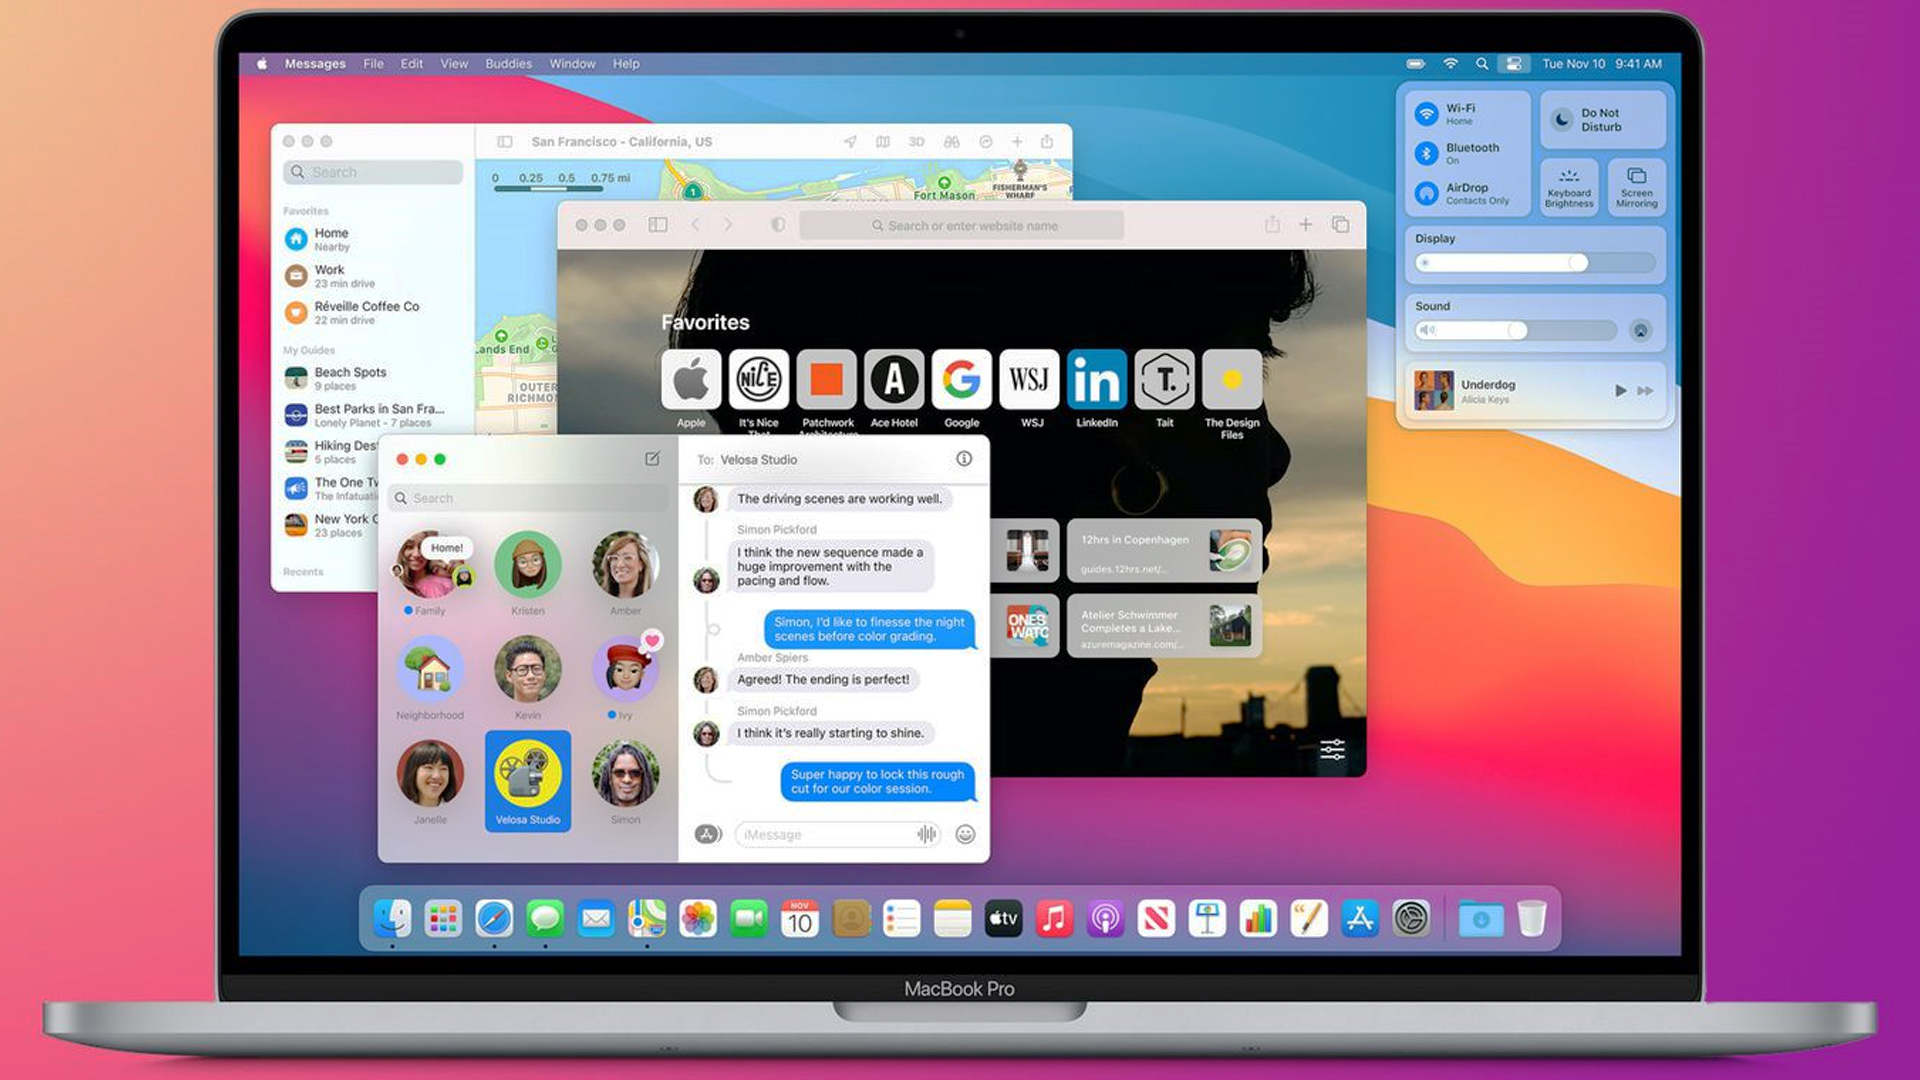 macOS Big Sur running on a MacBook Pro